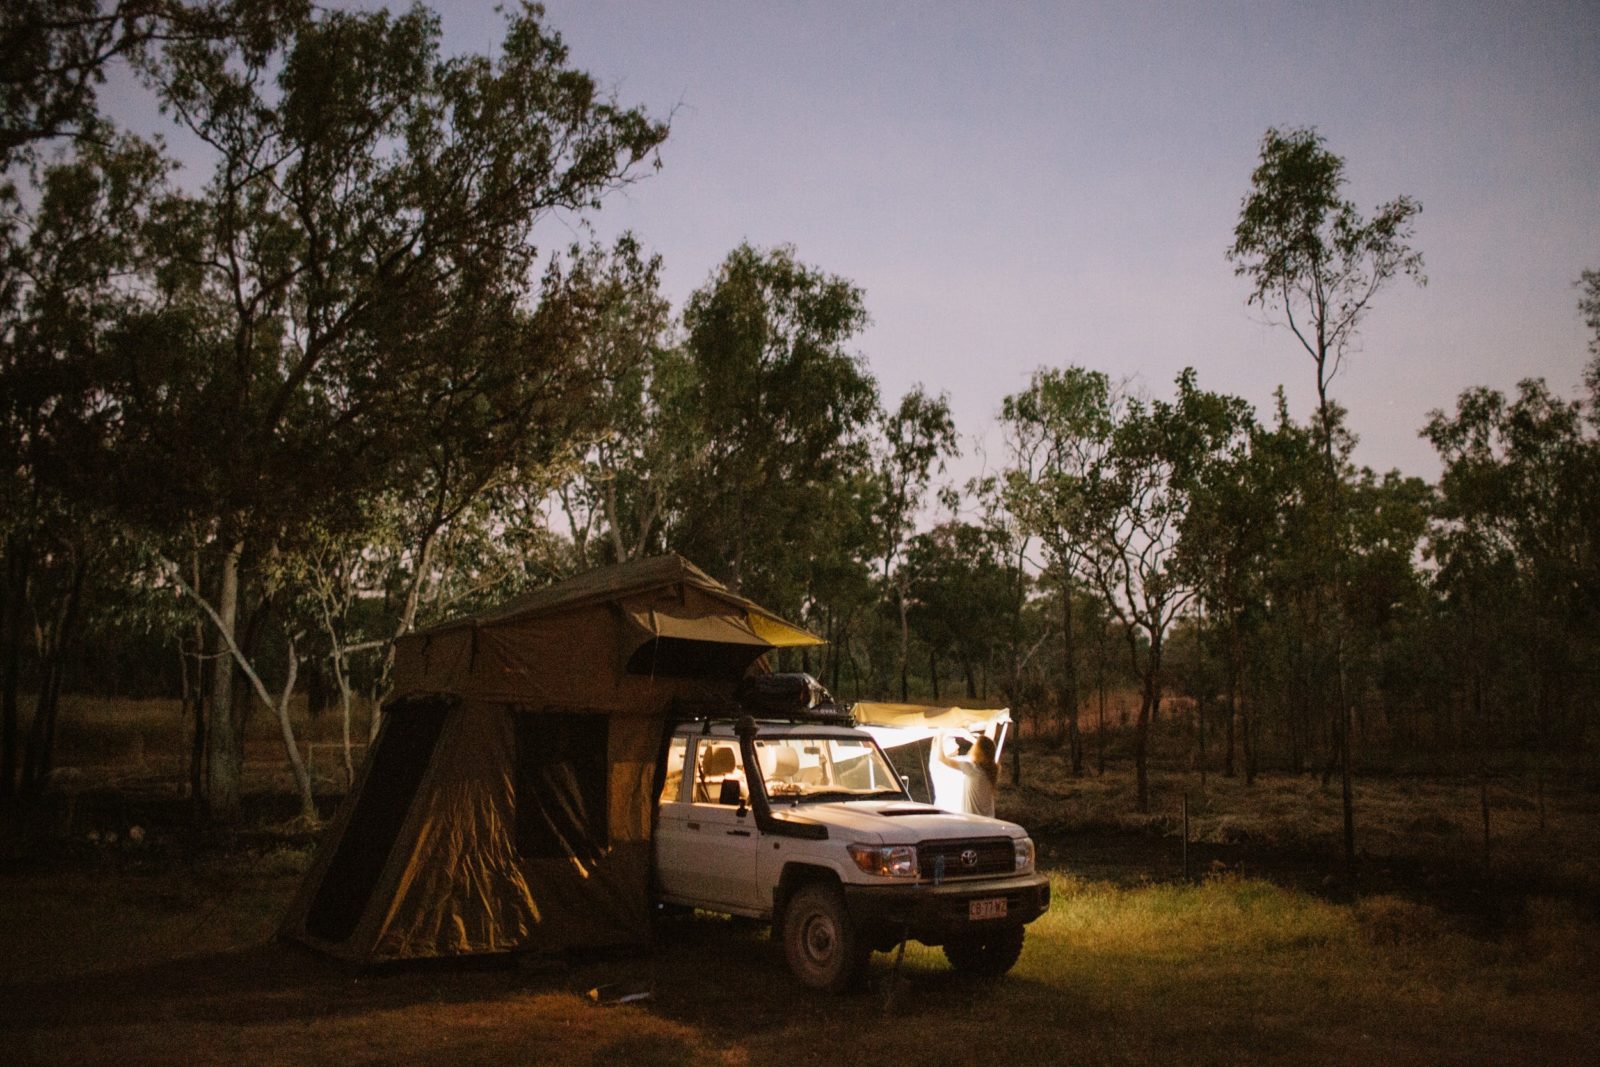 Britz Campervans and 4WD, Broome, Western Australia